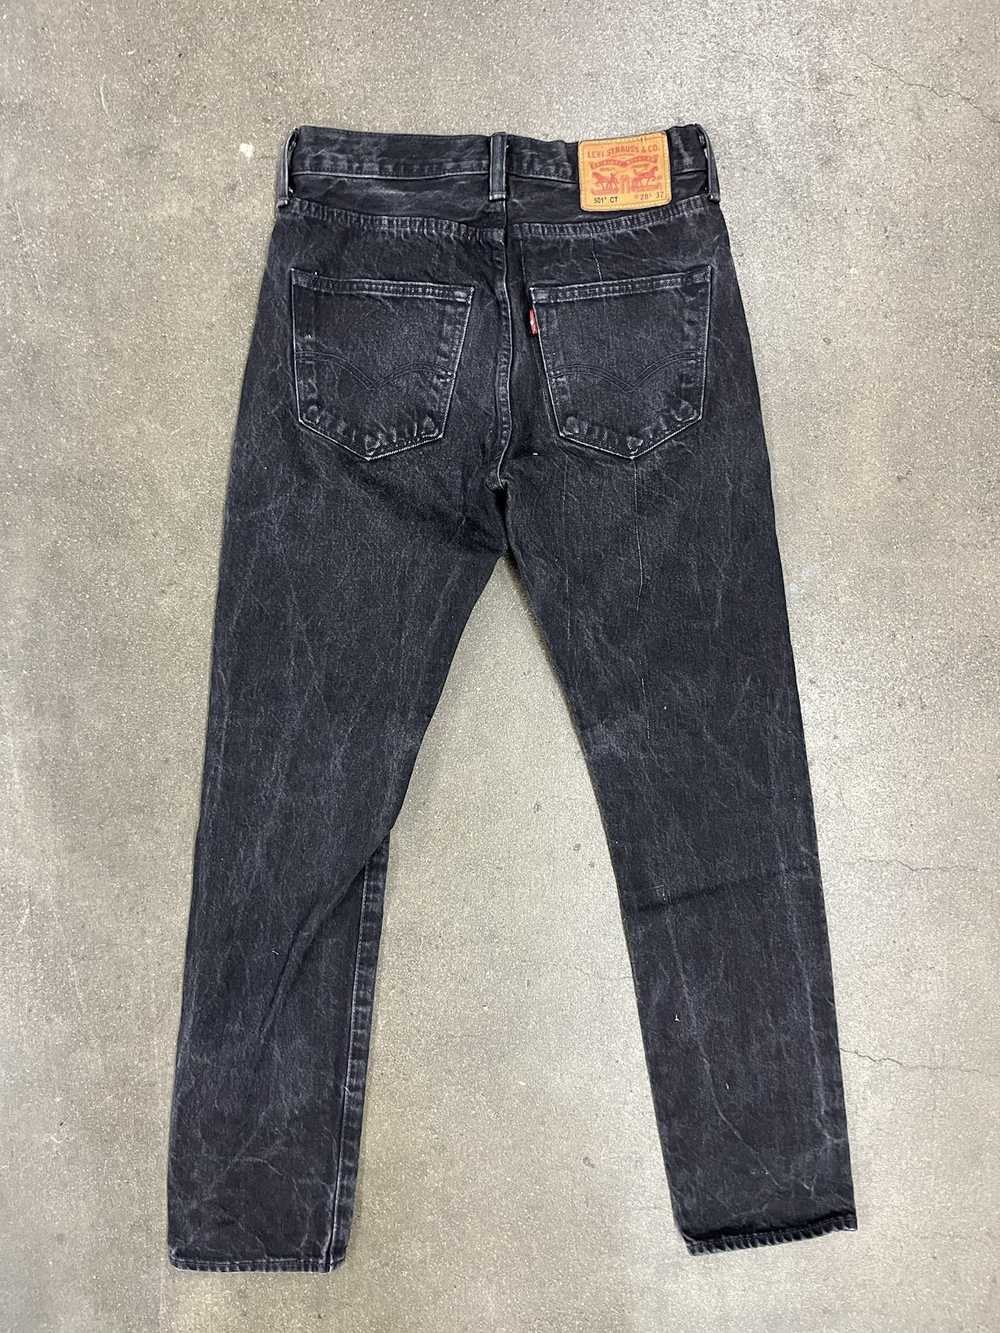 Streetwear × Vintage Levis 501 29 x 32 Black Jeans - image 3